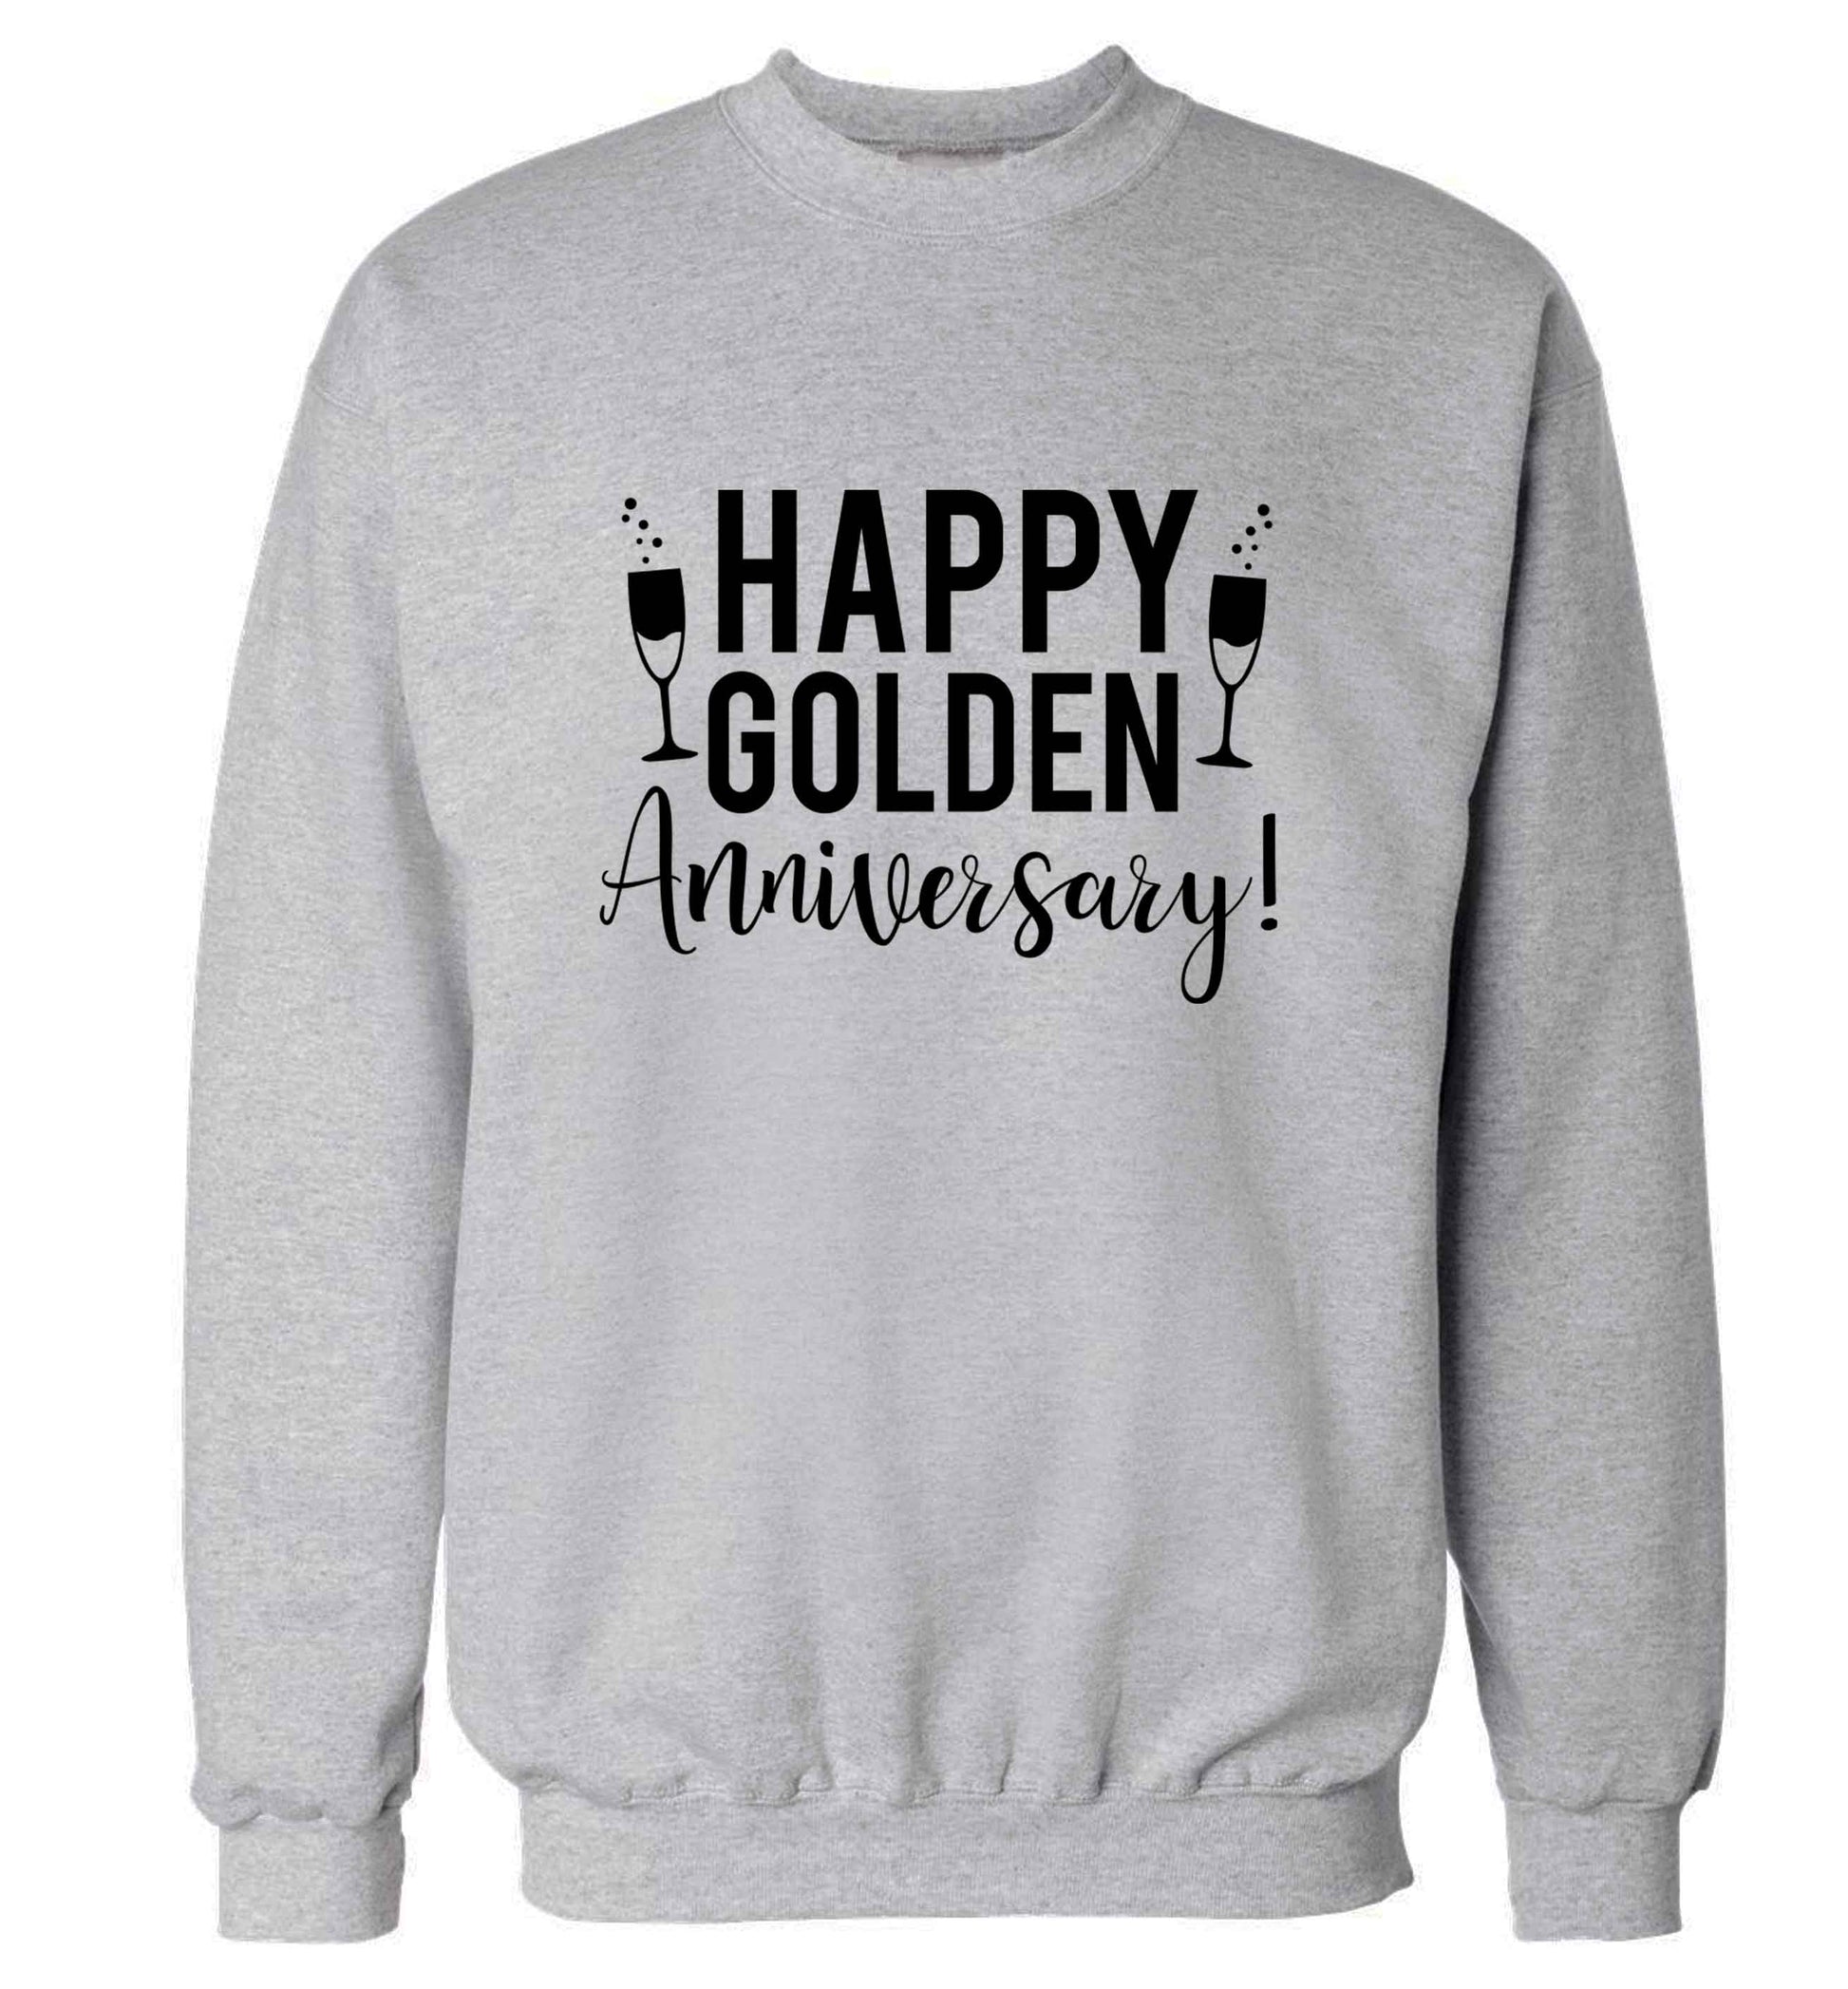 Happy golden anniversary! adult's unisex grey sweater 2XL